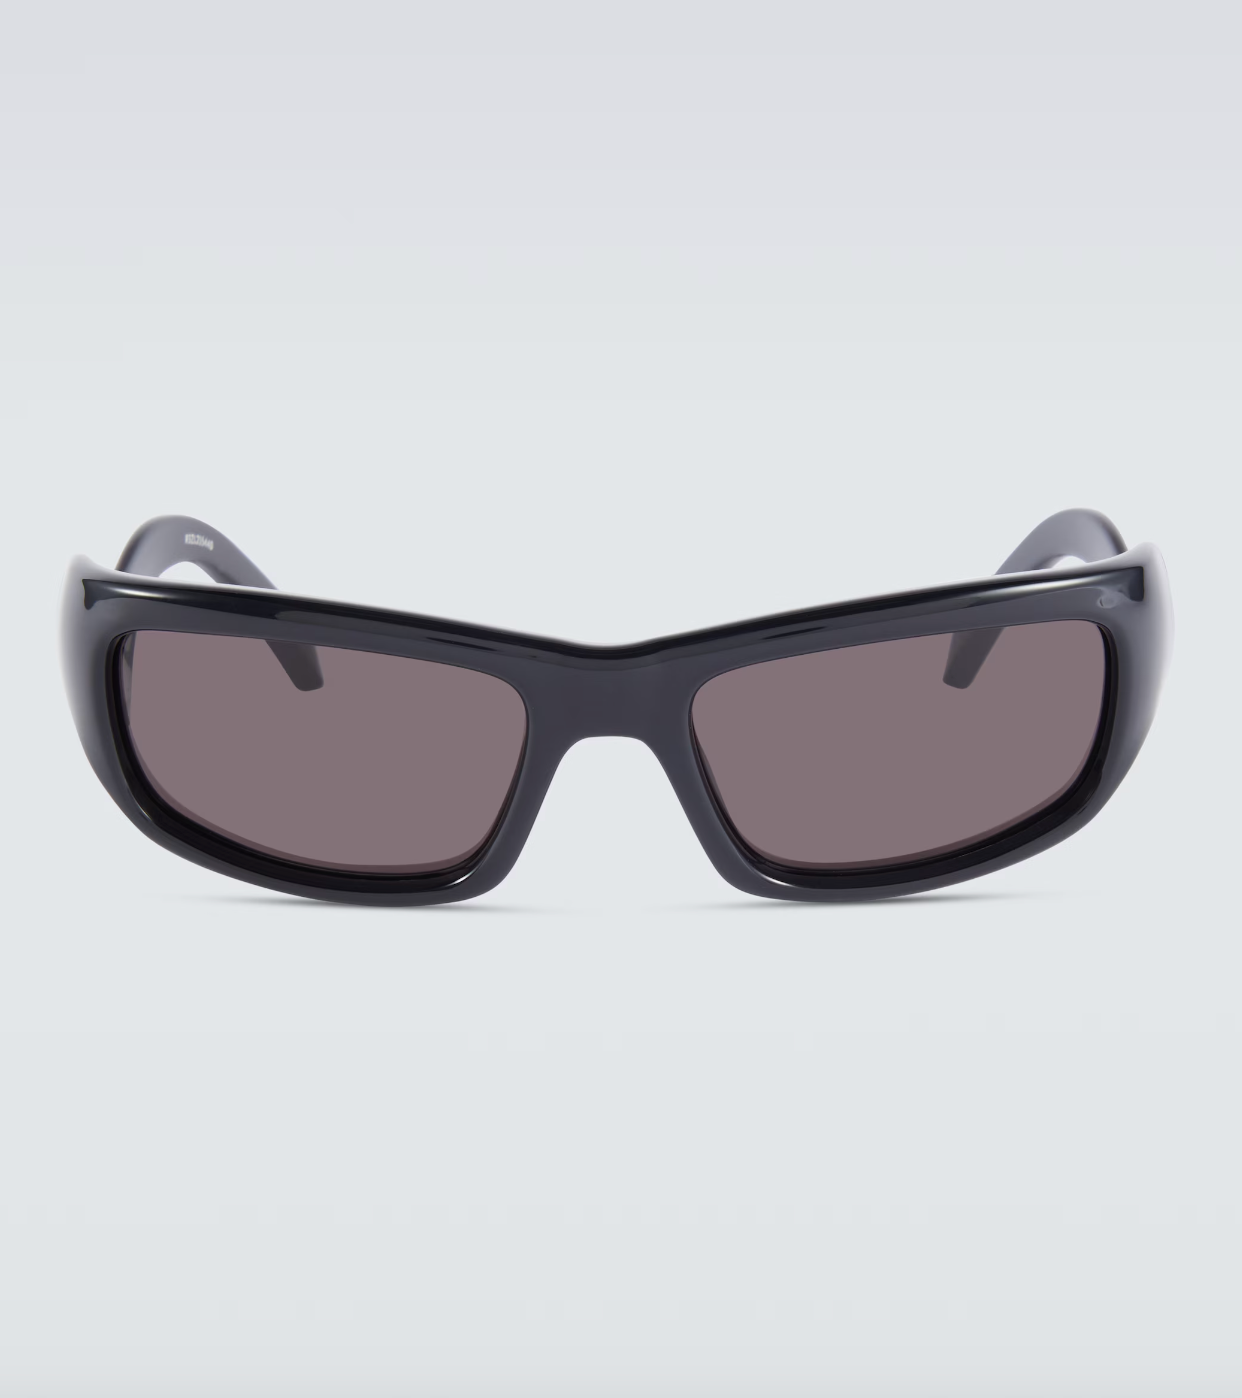 Balenciaga BB0320S-001 58mm New Sunglasses